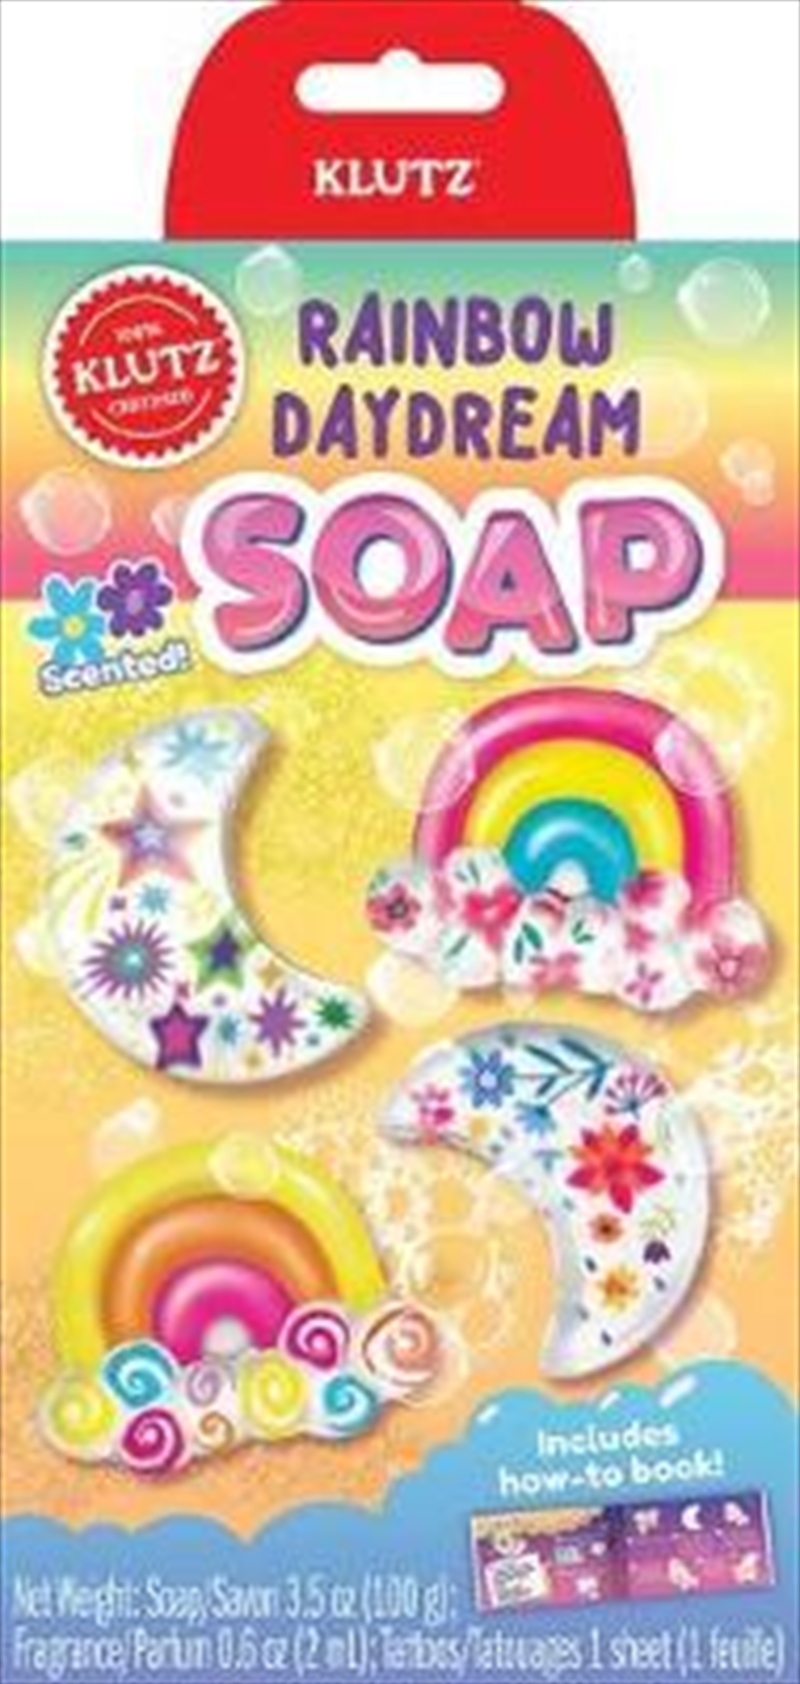 Rainbow Daydream Soap (KLUTZ)/Product Detail/Kids Activity Books